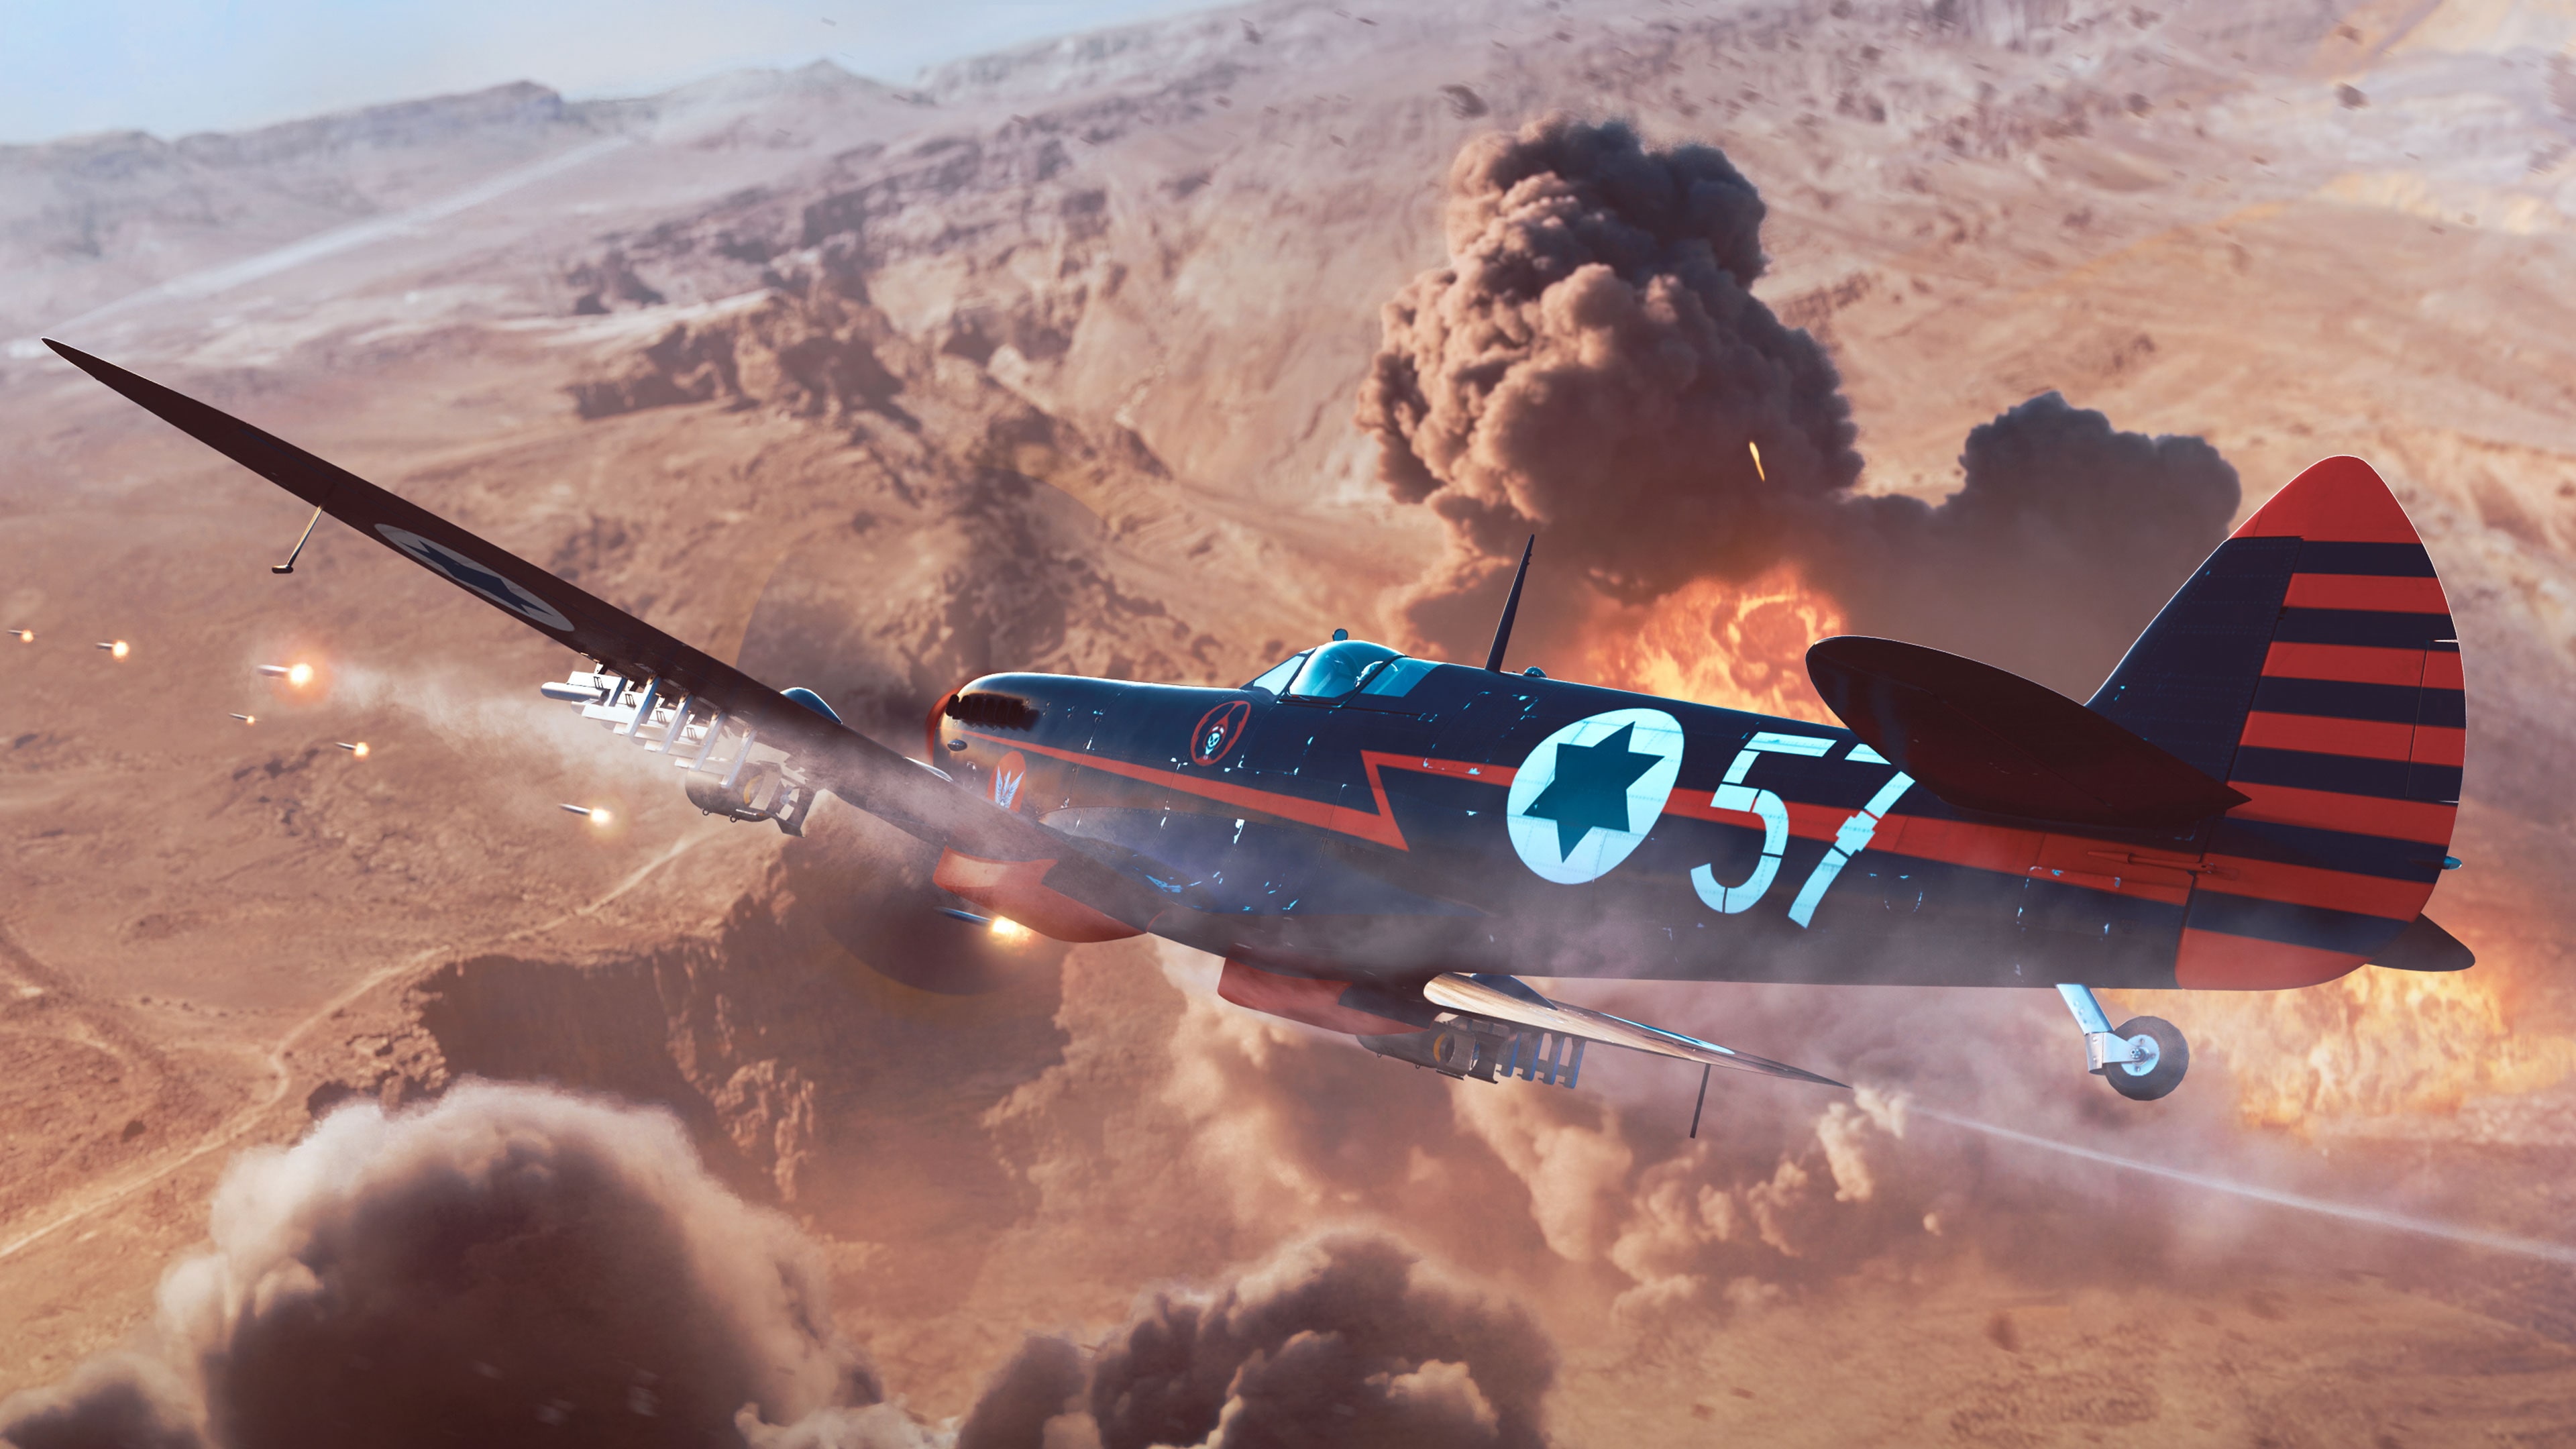 War Thunder - Набор Spitfire Эзера Вейцмана